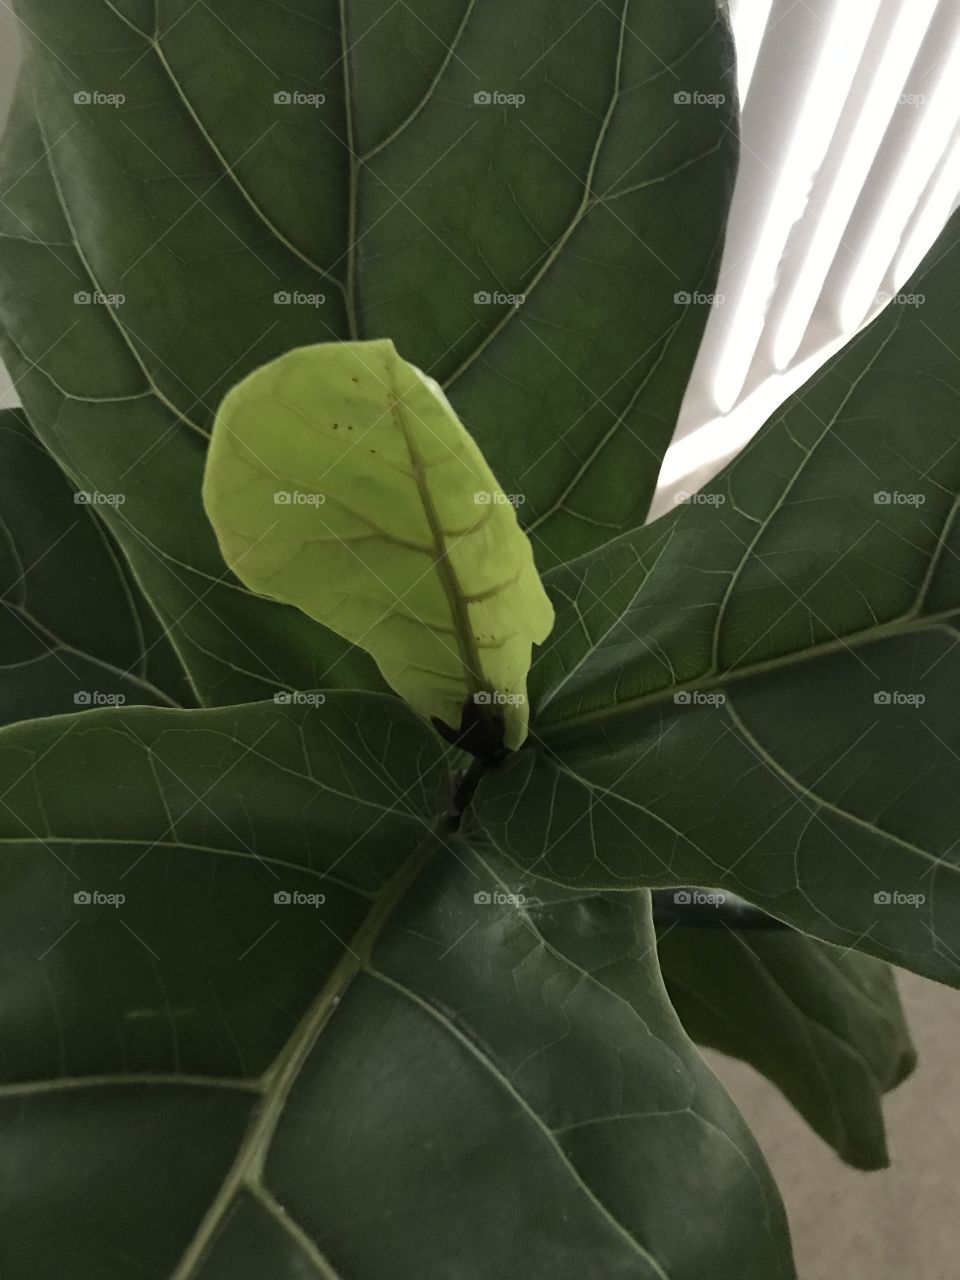 New leaf excitement